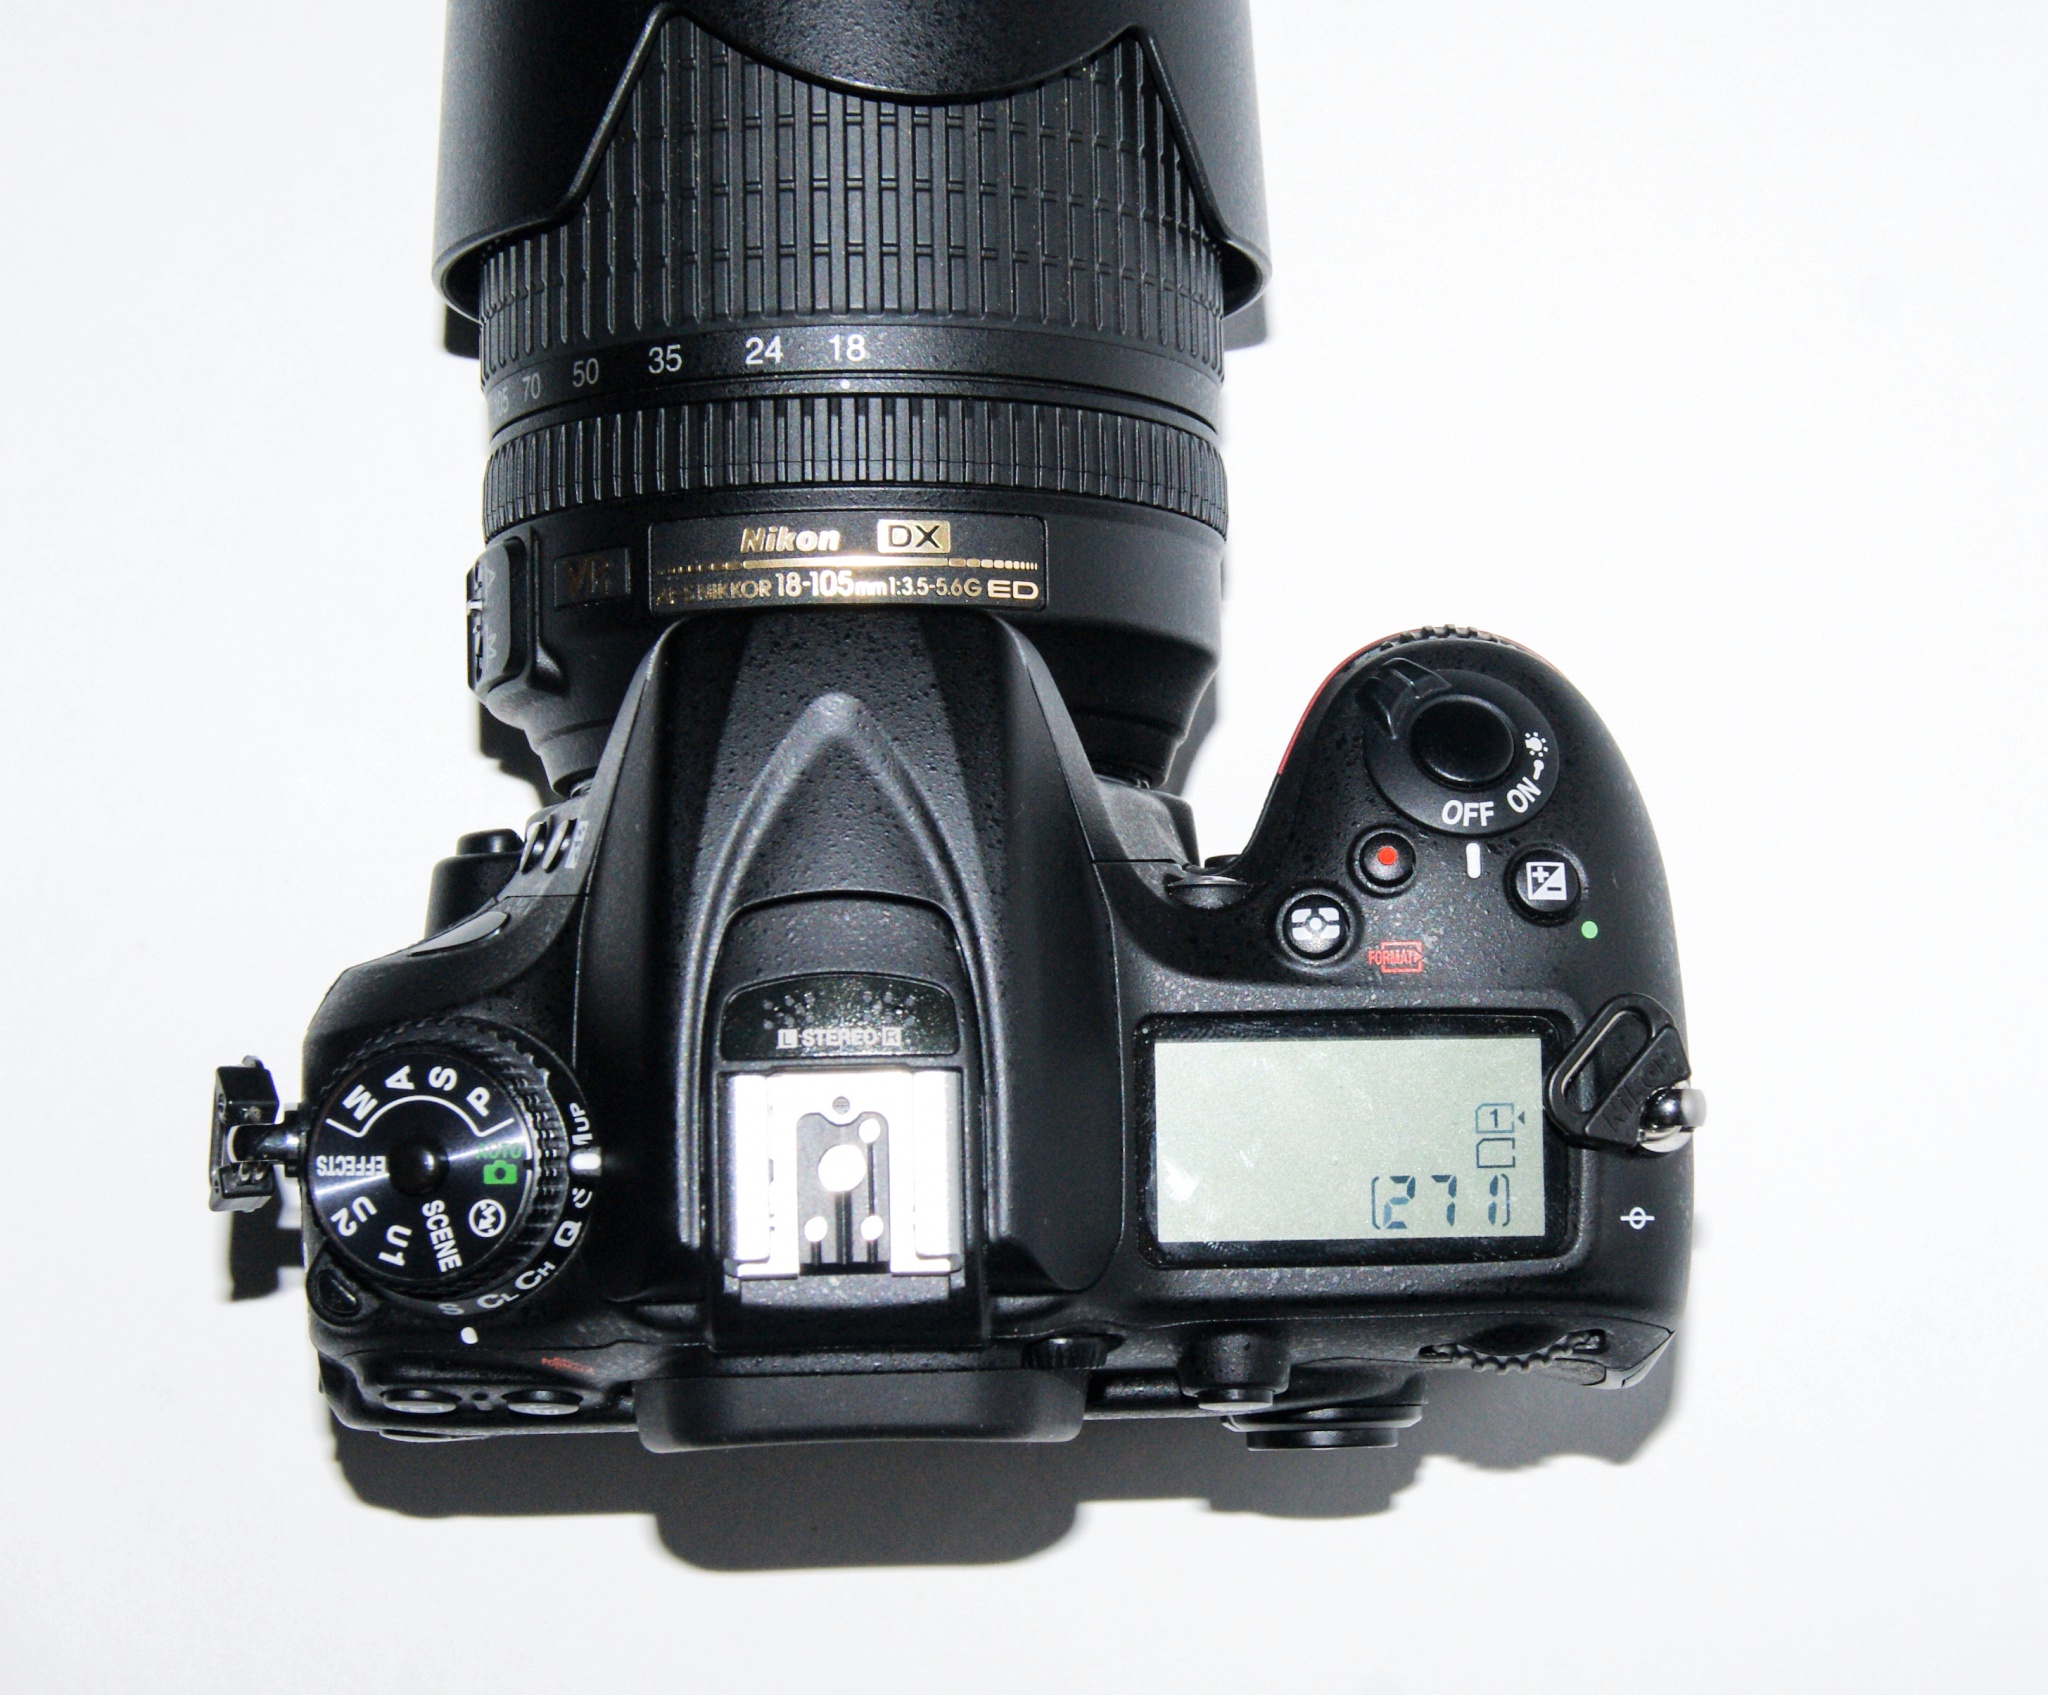 18 105 vr. Фотоаппарат Nikon d7200 Kit. Зеркальный фотоаппарат Nikon 7200. Nikon d7200 Kit 18-105 VR. D7200 Nikon DNS.